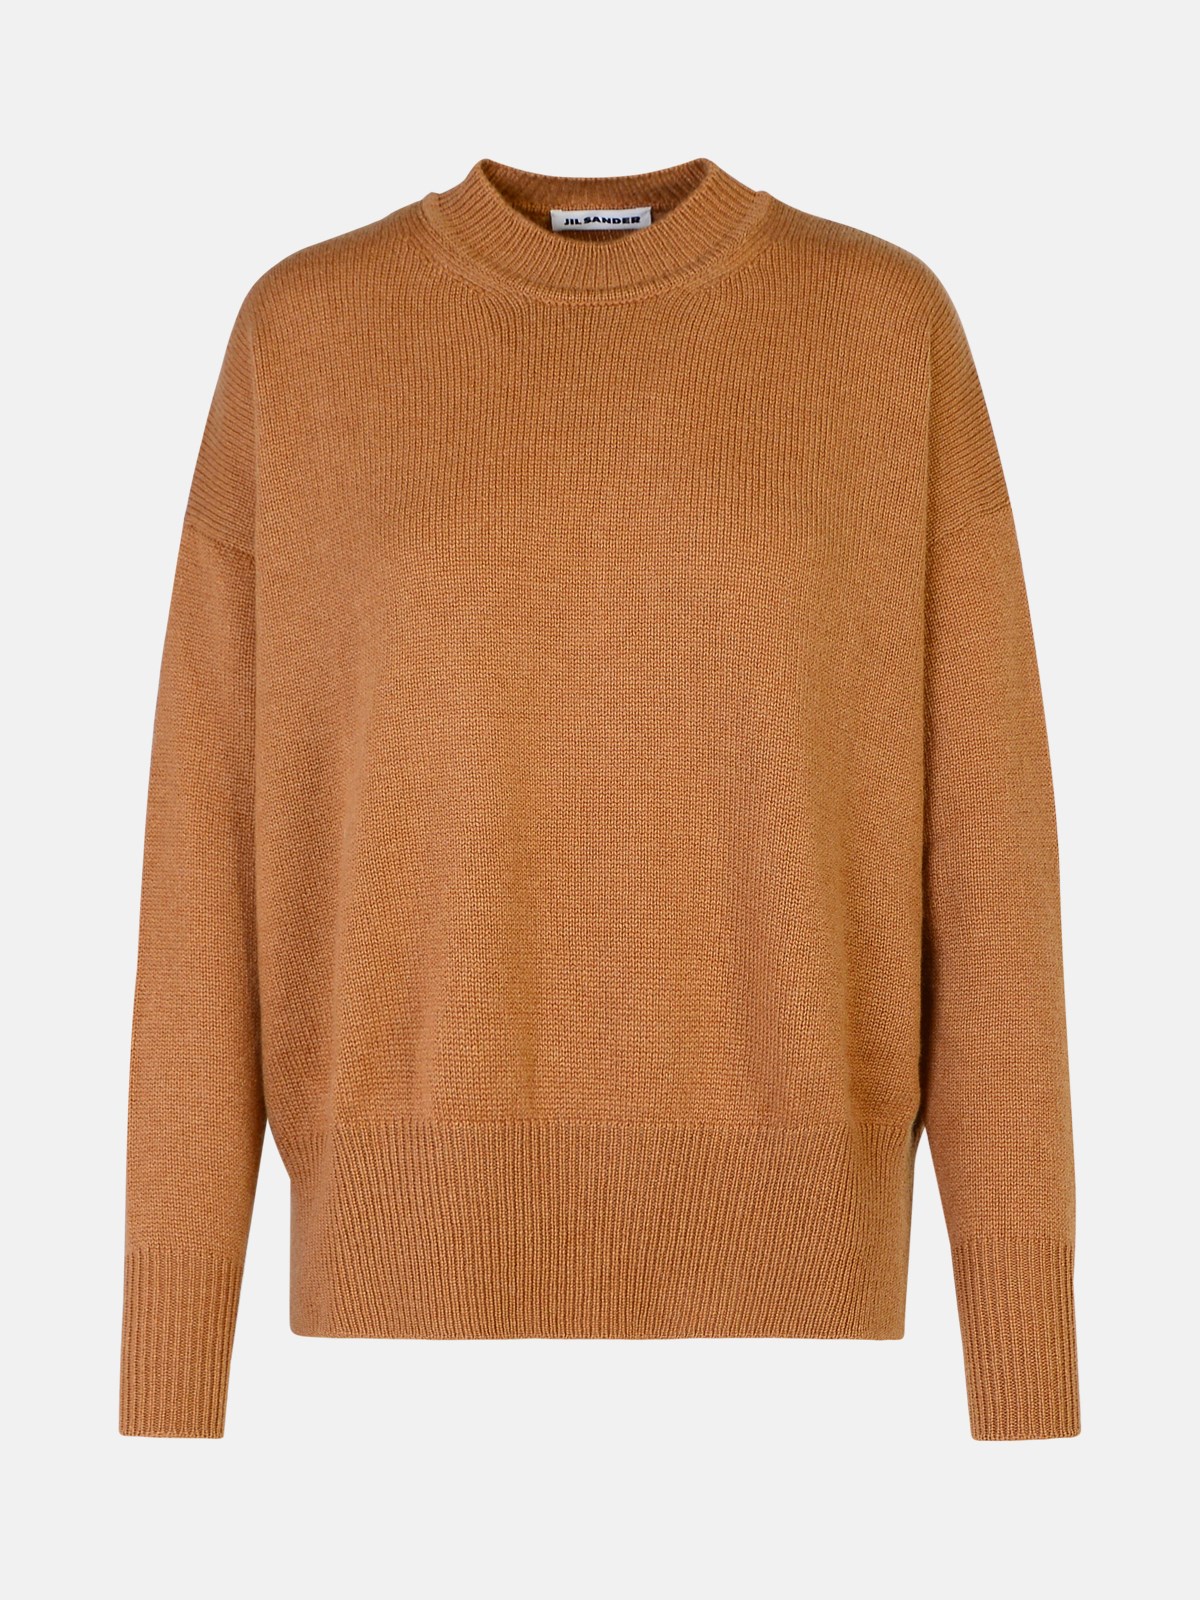 Jil Sander Brown Cashmere Sweater